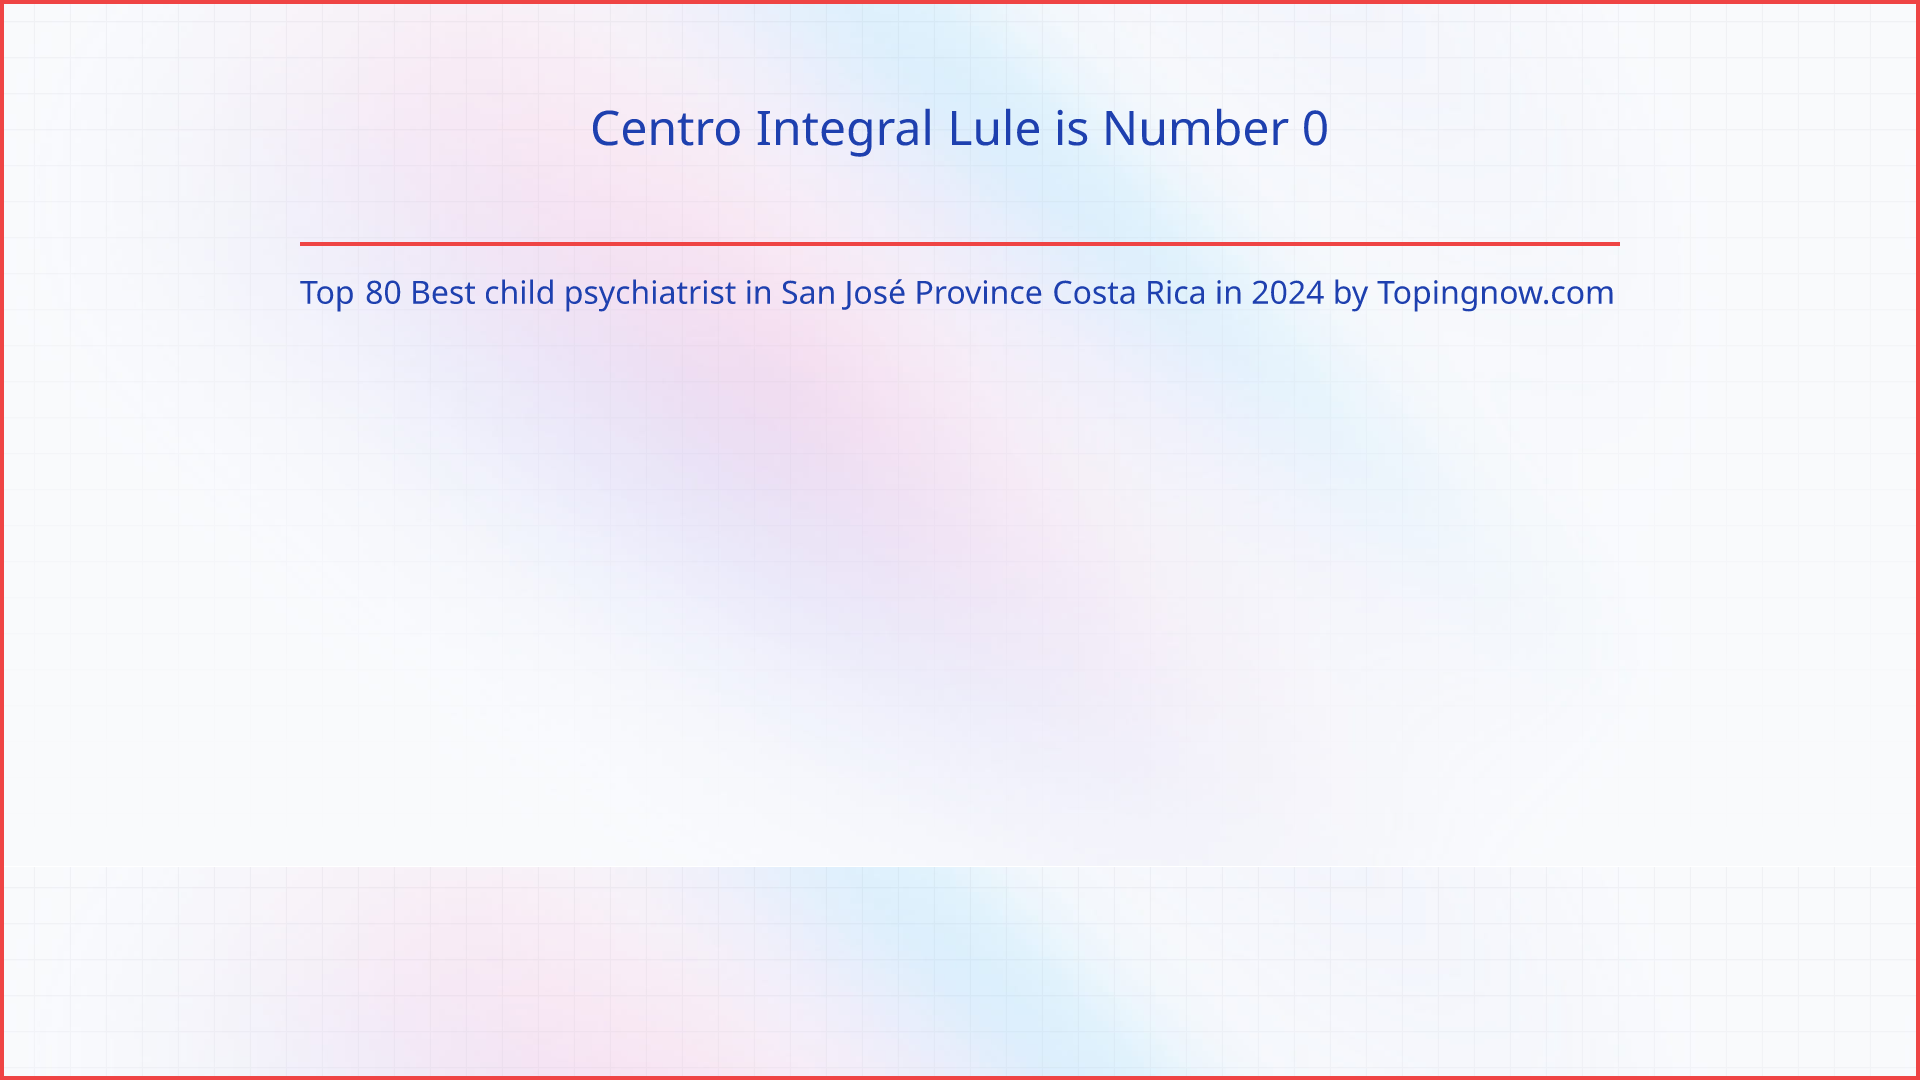 Centro Integral Lule: Top 80 Best child psychiatrist in San José Province Costa Rica in 2024